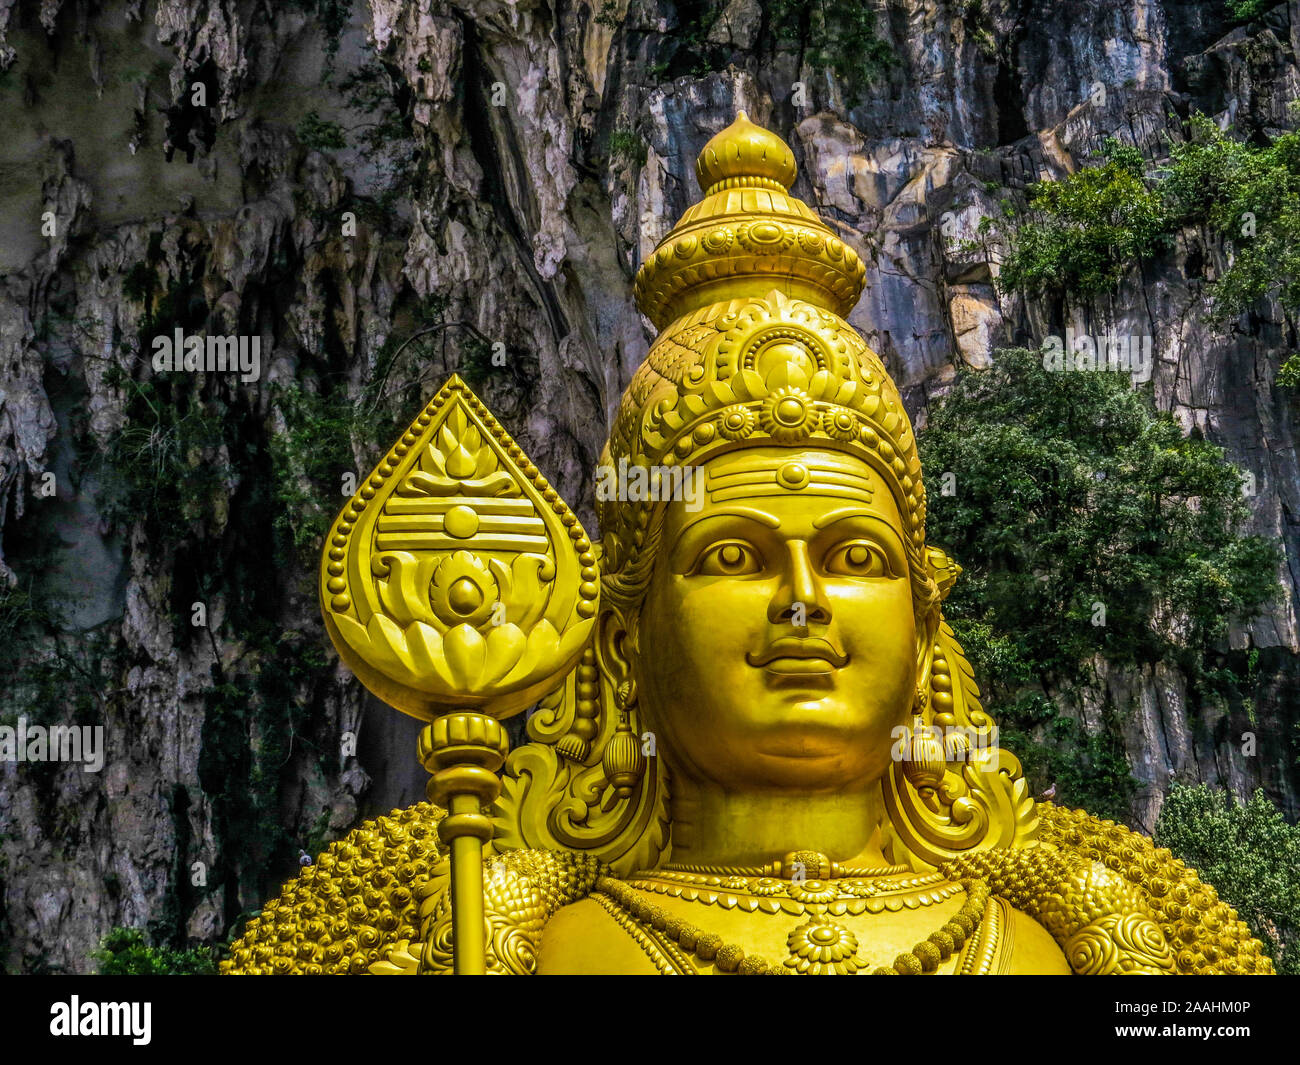 Lord Murugan Statue, Batu Caves, Malaysia Stock Photo - Alamy